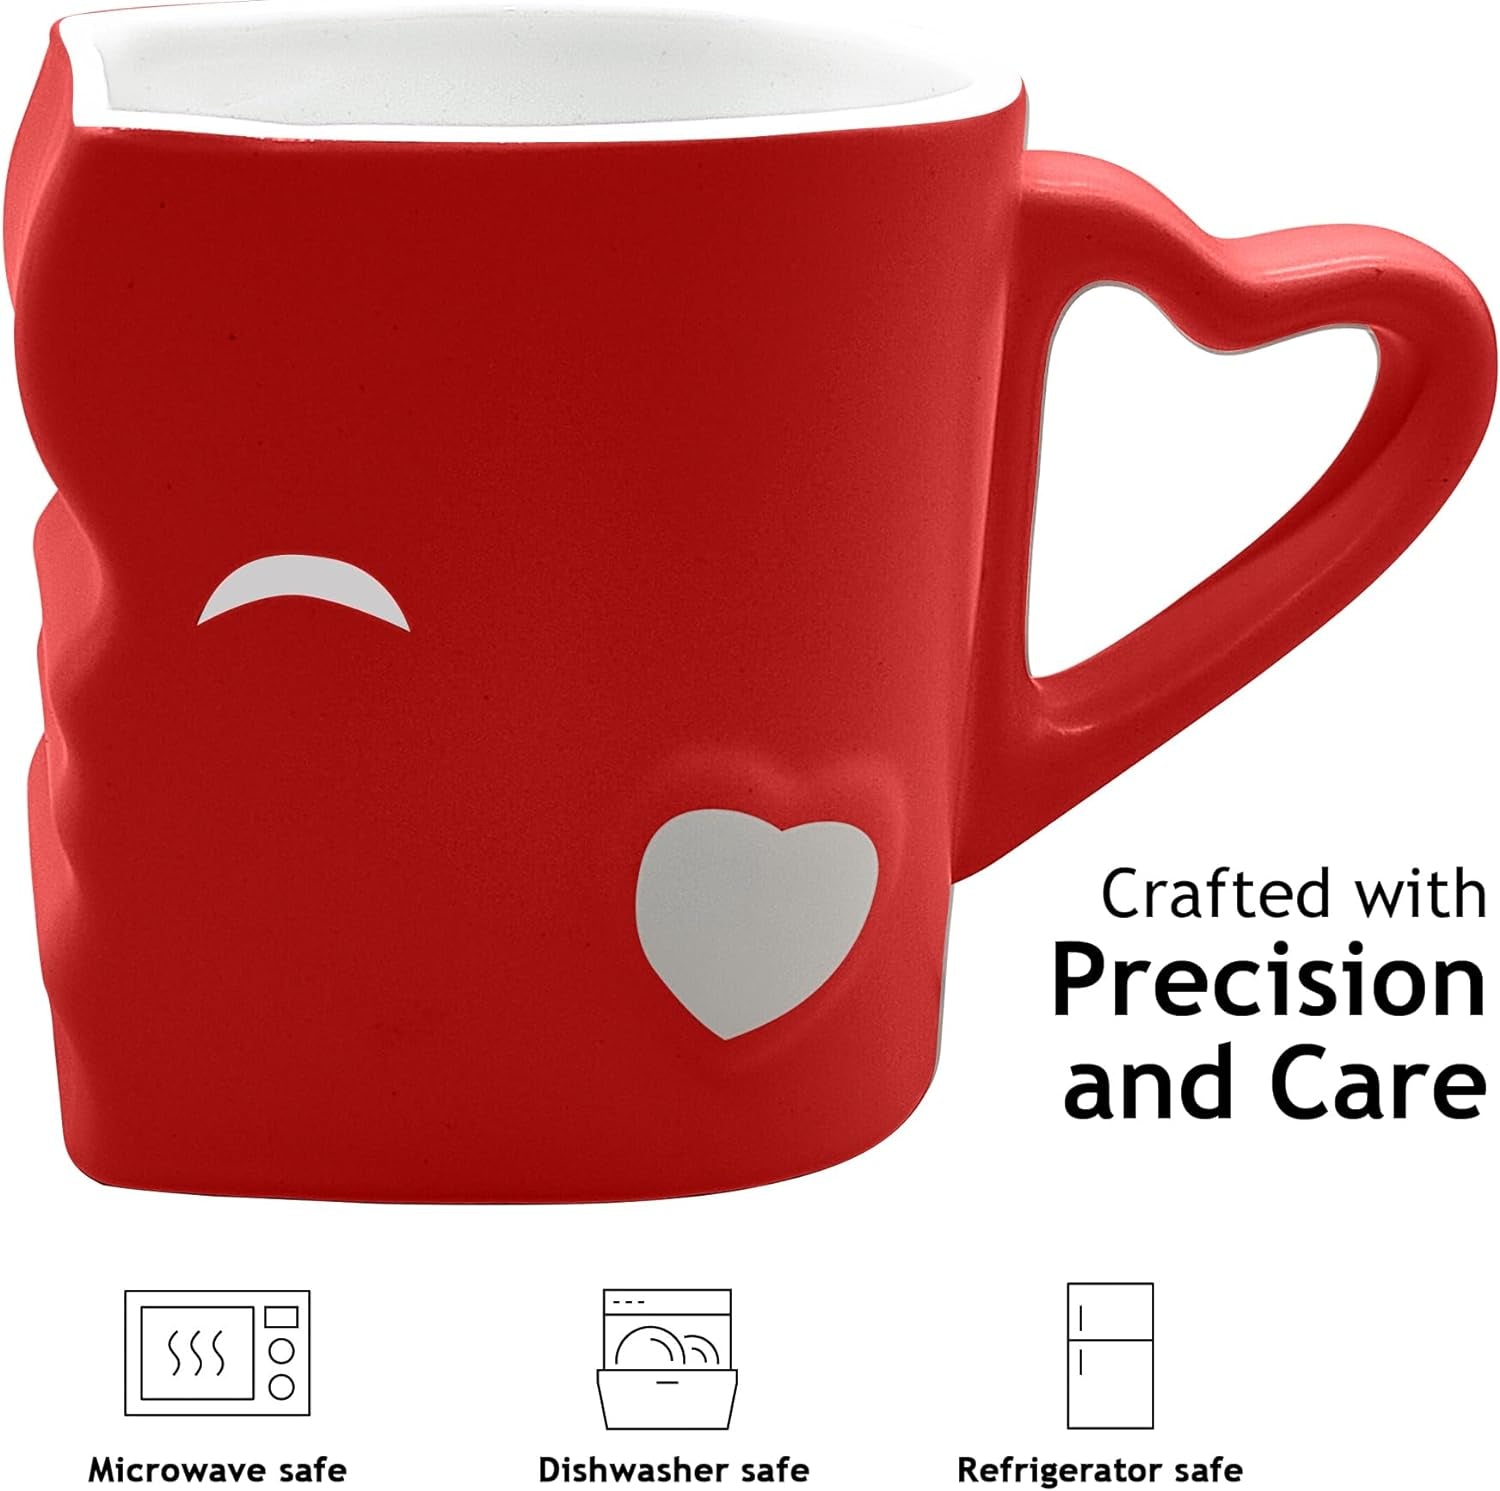 - Coffee Mugs/Kissing Mugs Bridal Pair Gift Set for Weddings/Birthday/Anniversary with Gift Box (Red)